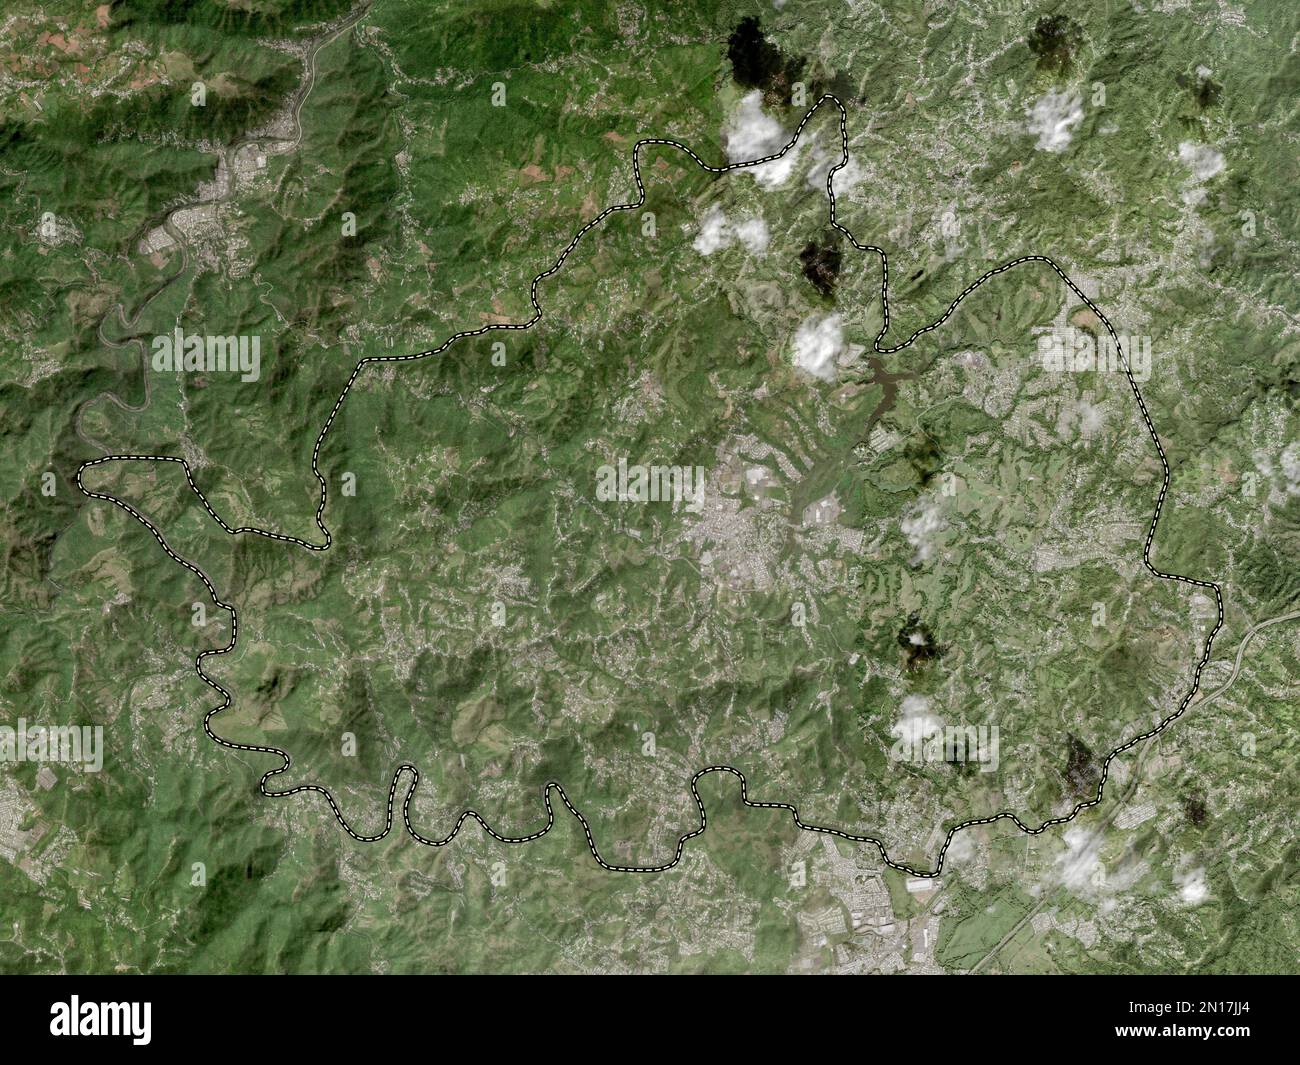 Cidra, municipality of Puerto Rico. High resolution satellite map Stock Photo